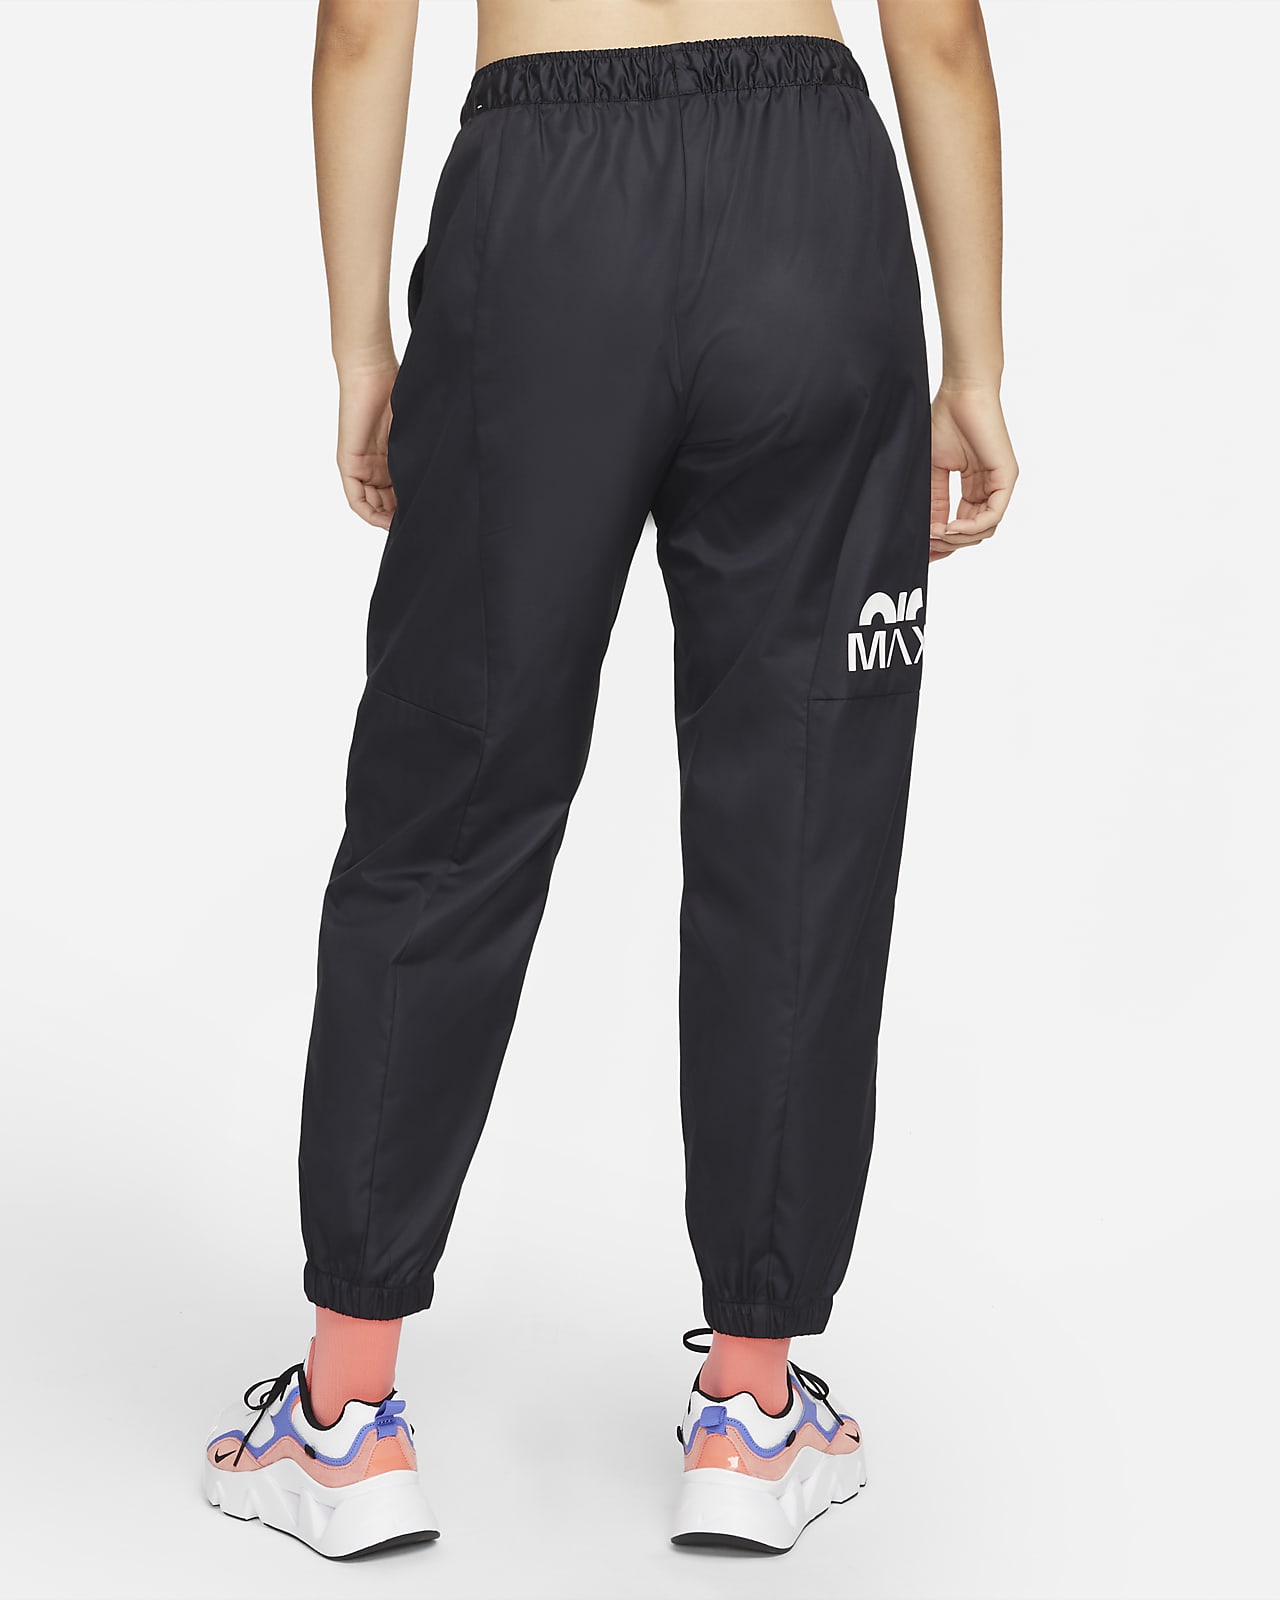 Nike Sportswear Women's Woven Mid-Rise Air Max Day Trousers. Nike HR